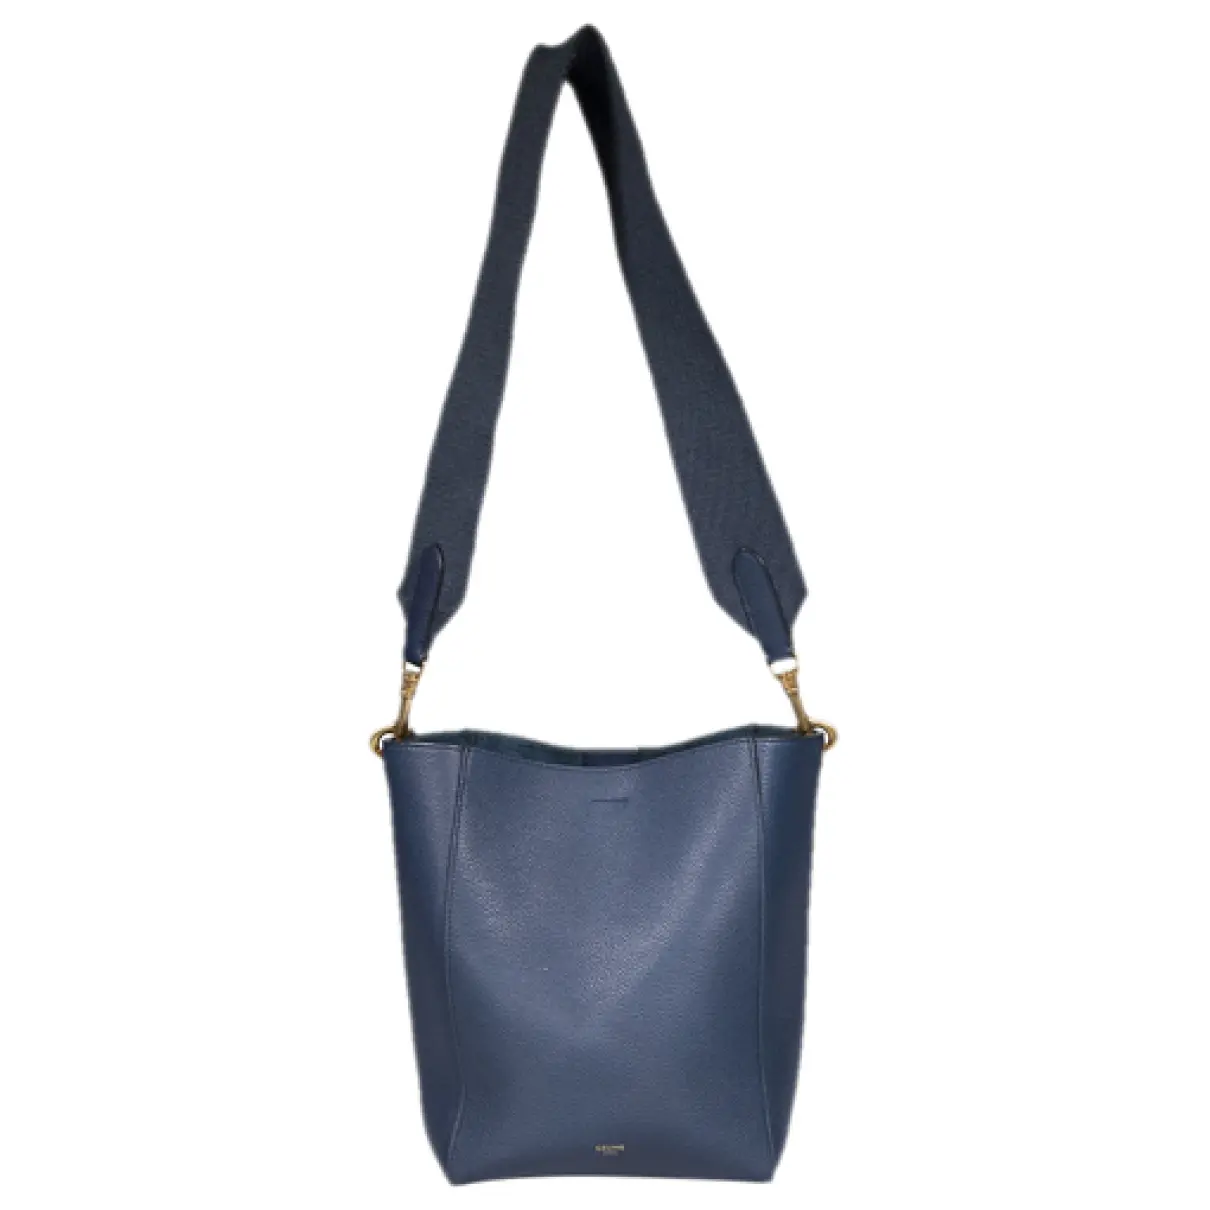 Seau Sangle leather handbag